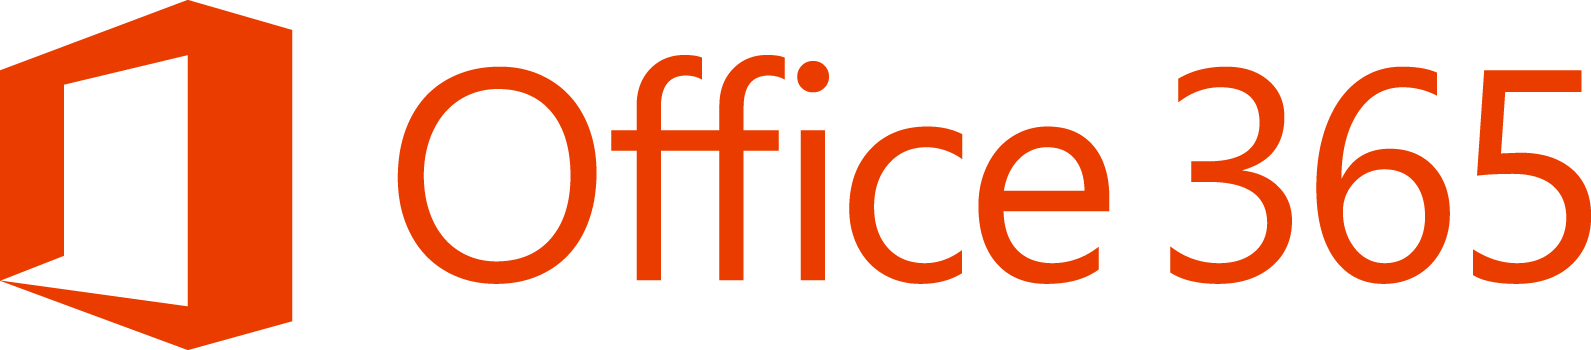 Office365-Logo-Transparent-Print